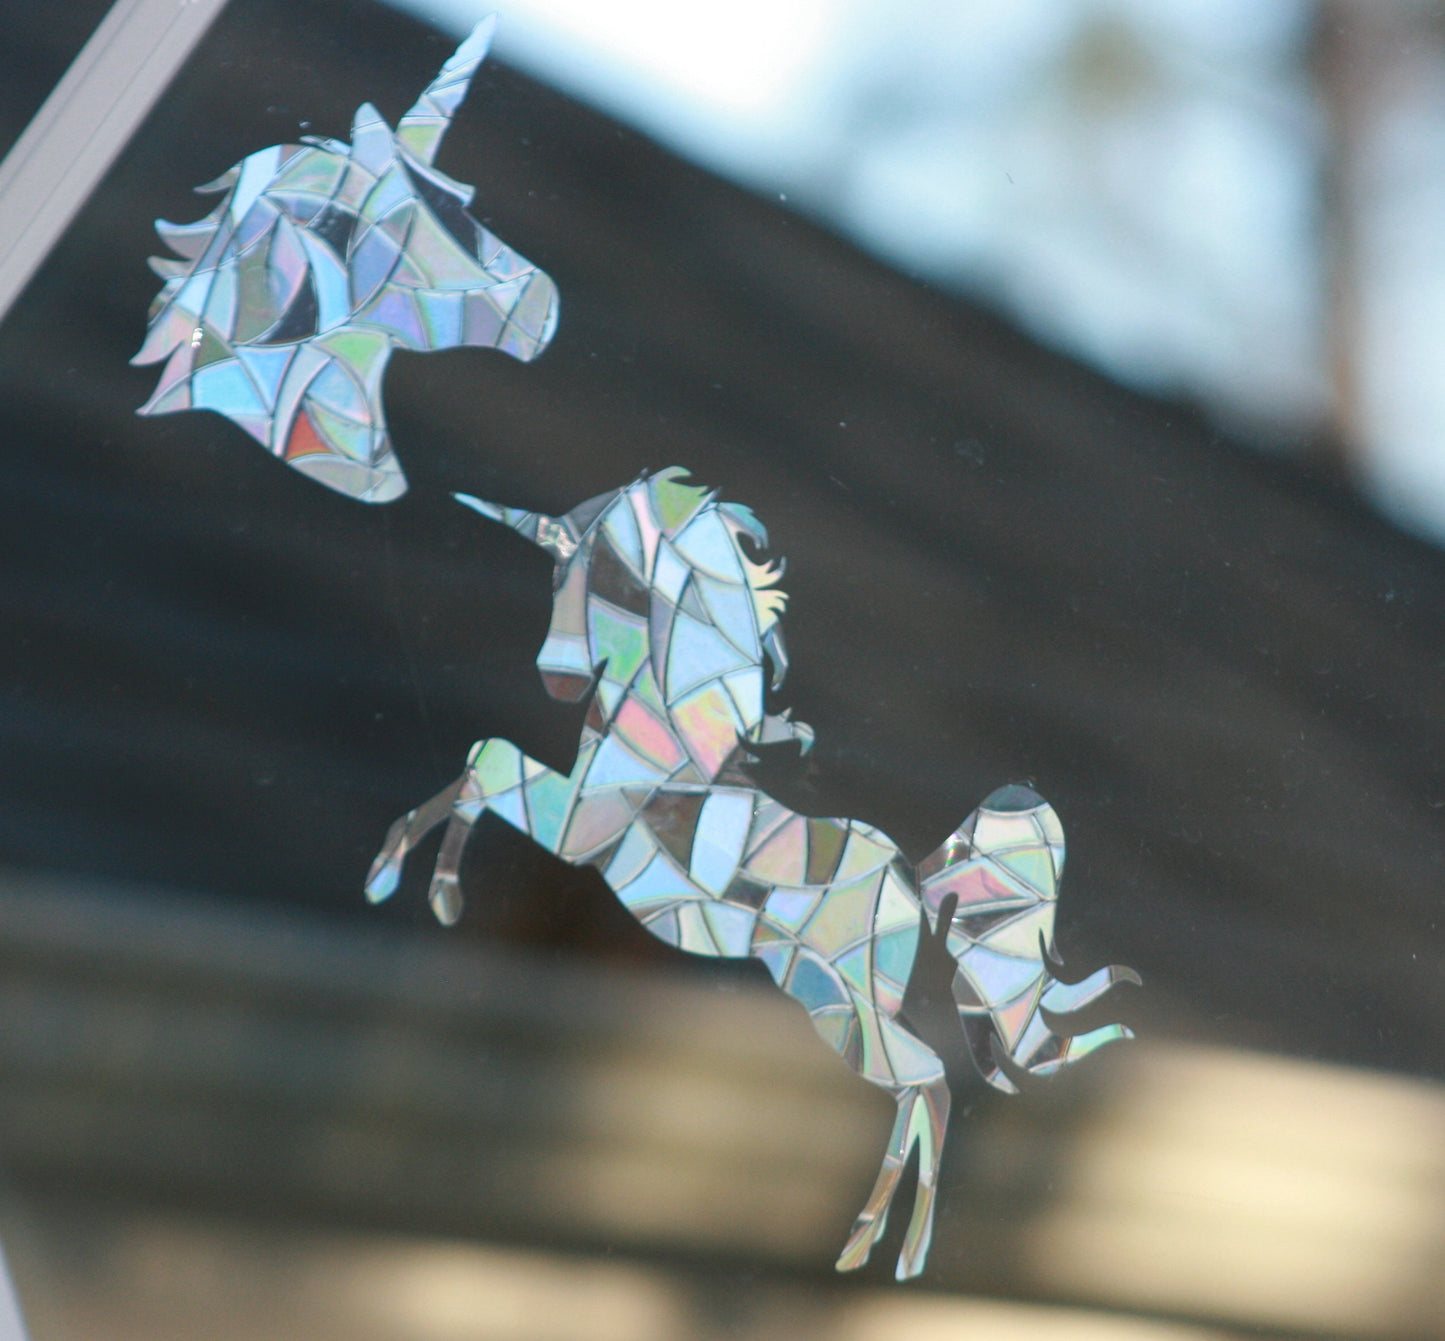 Unicorn Window Clings. Sun Catcher. Rainbow Prism Decoration. Static Window Cling. 8 Decals with bonuses!